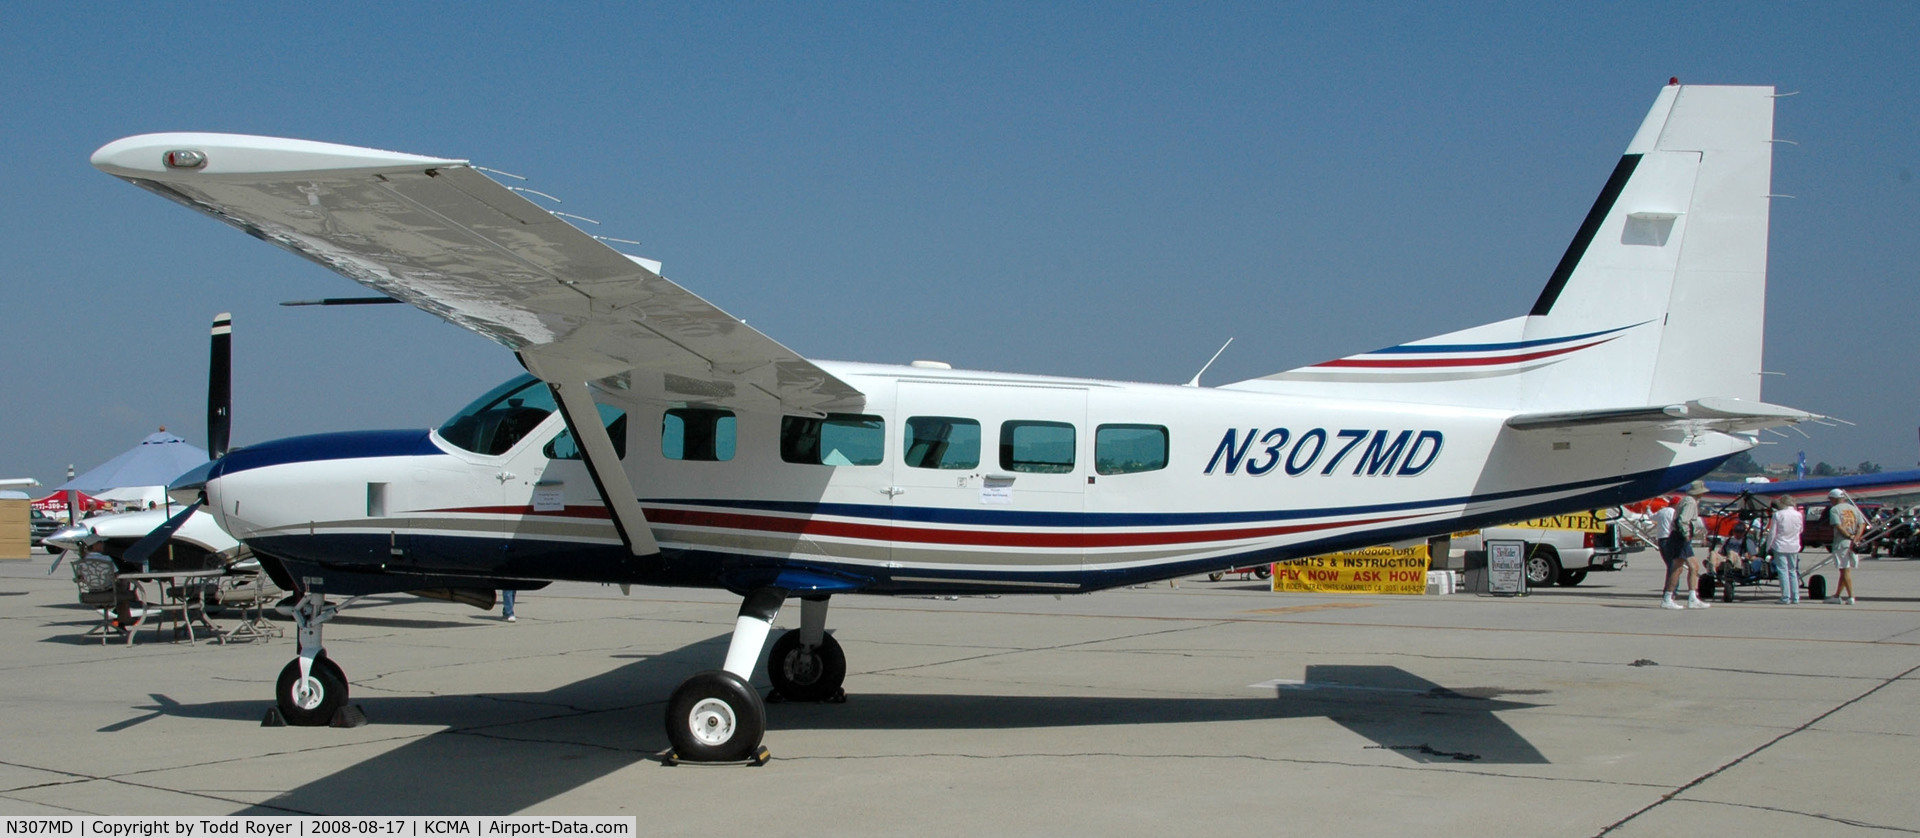 N307MD, 2004 Cessna 208 C/N 20800379, Camarillo Airshow 2008